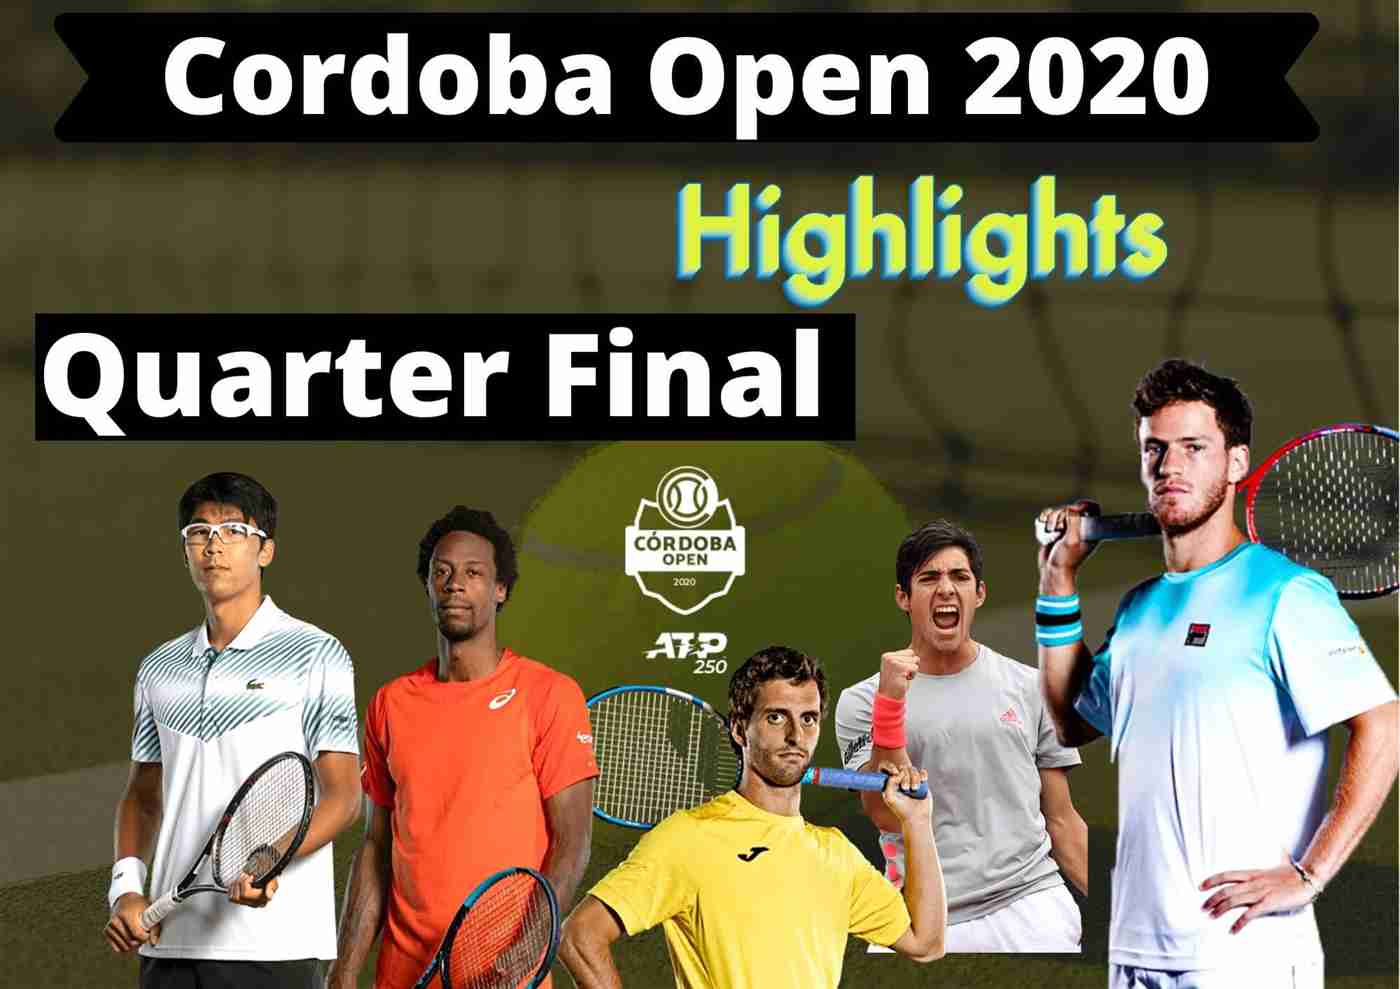 A Martin Vs C Moutet QuarterFinal Highlights 2020 Cordoba Open